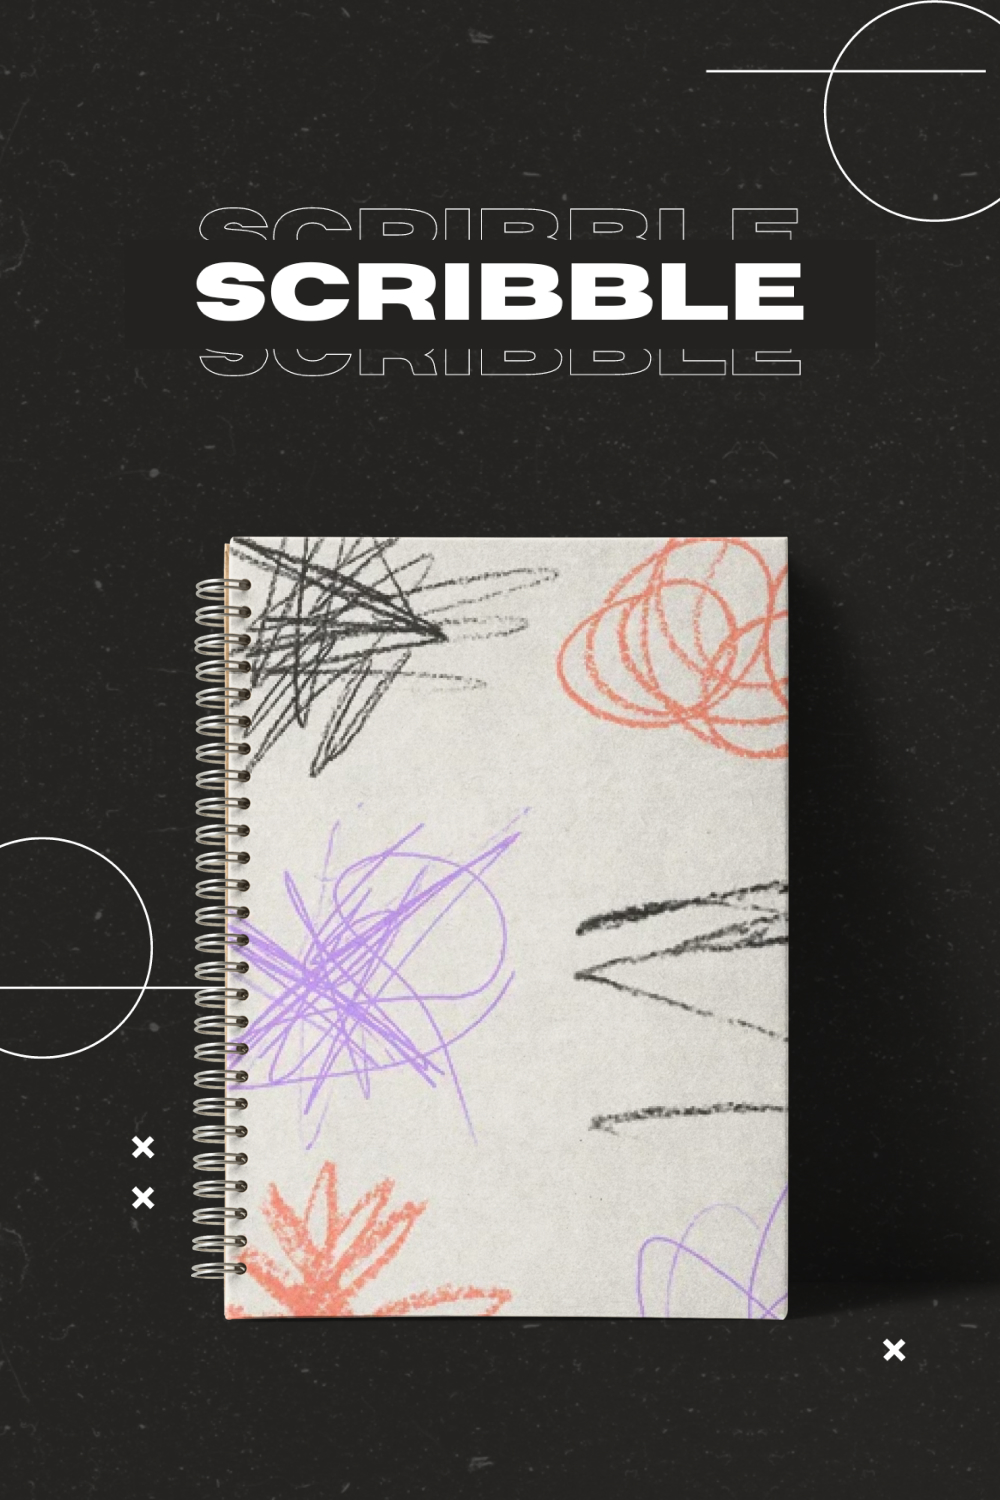 Scribble - 500+ Lines, Shapes + More - Pinterest.